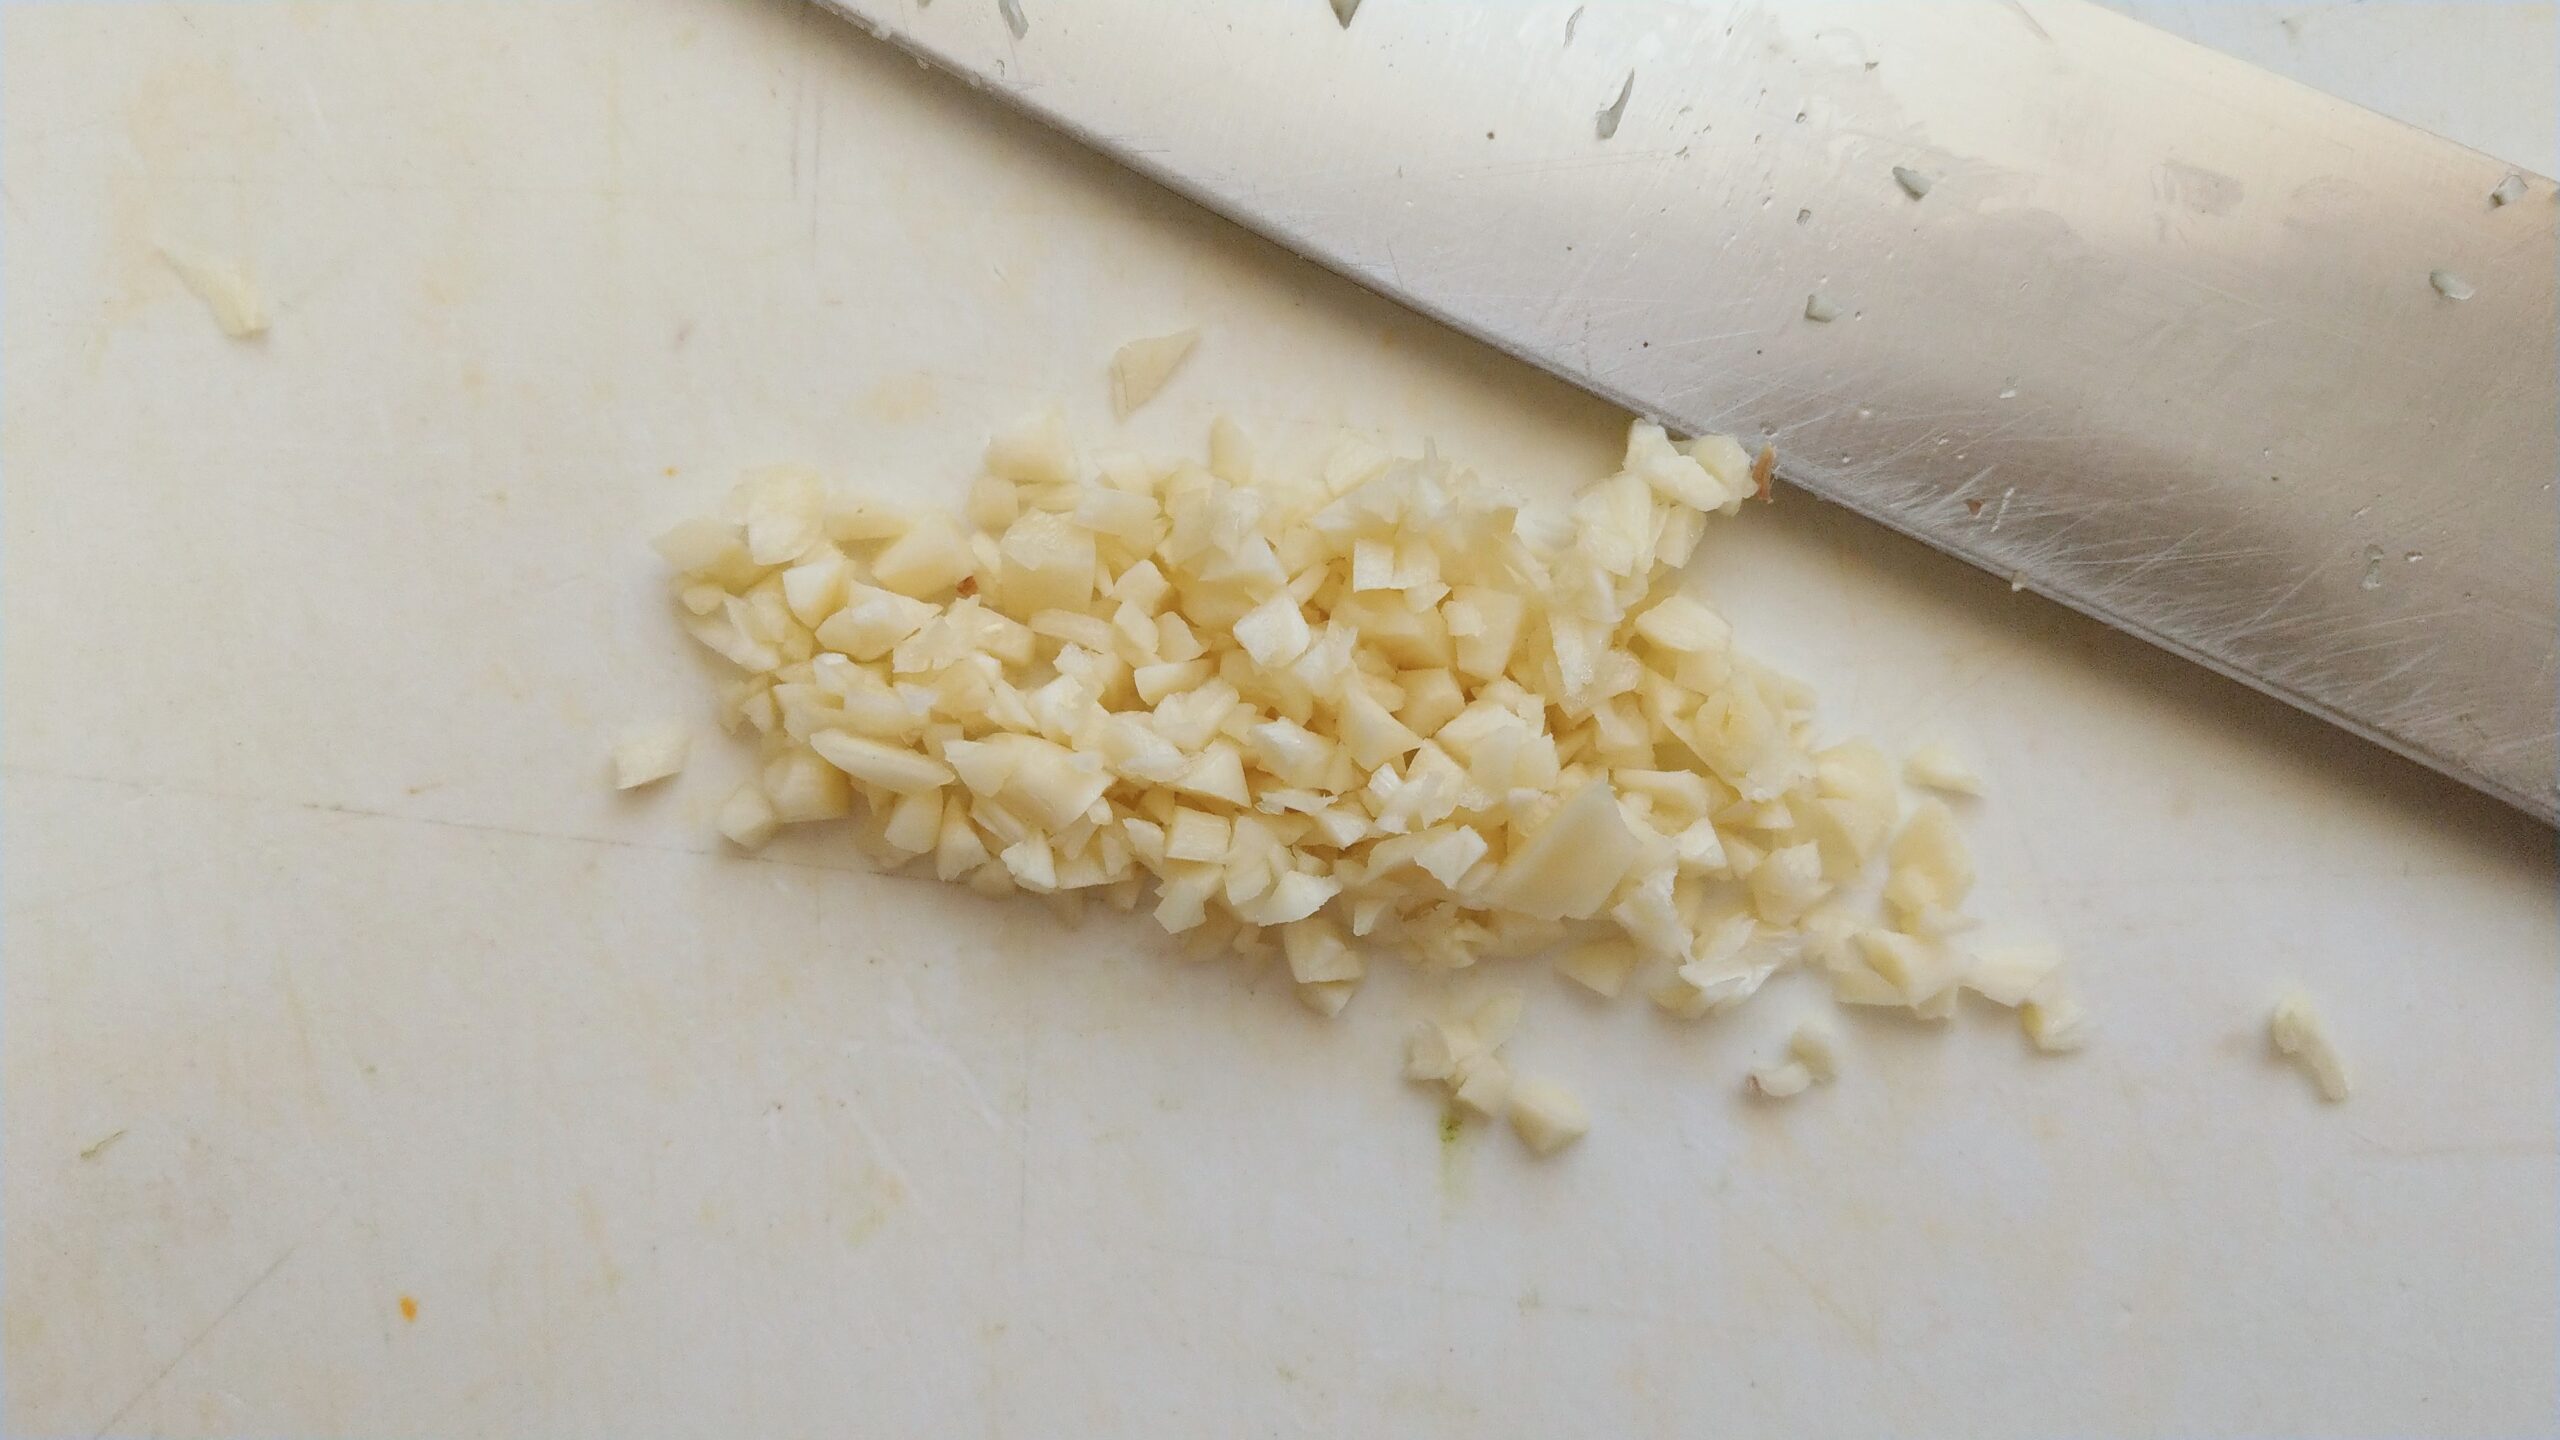 Garlic chopped up small